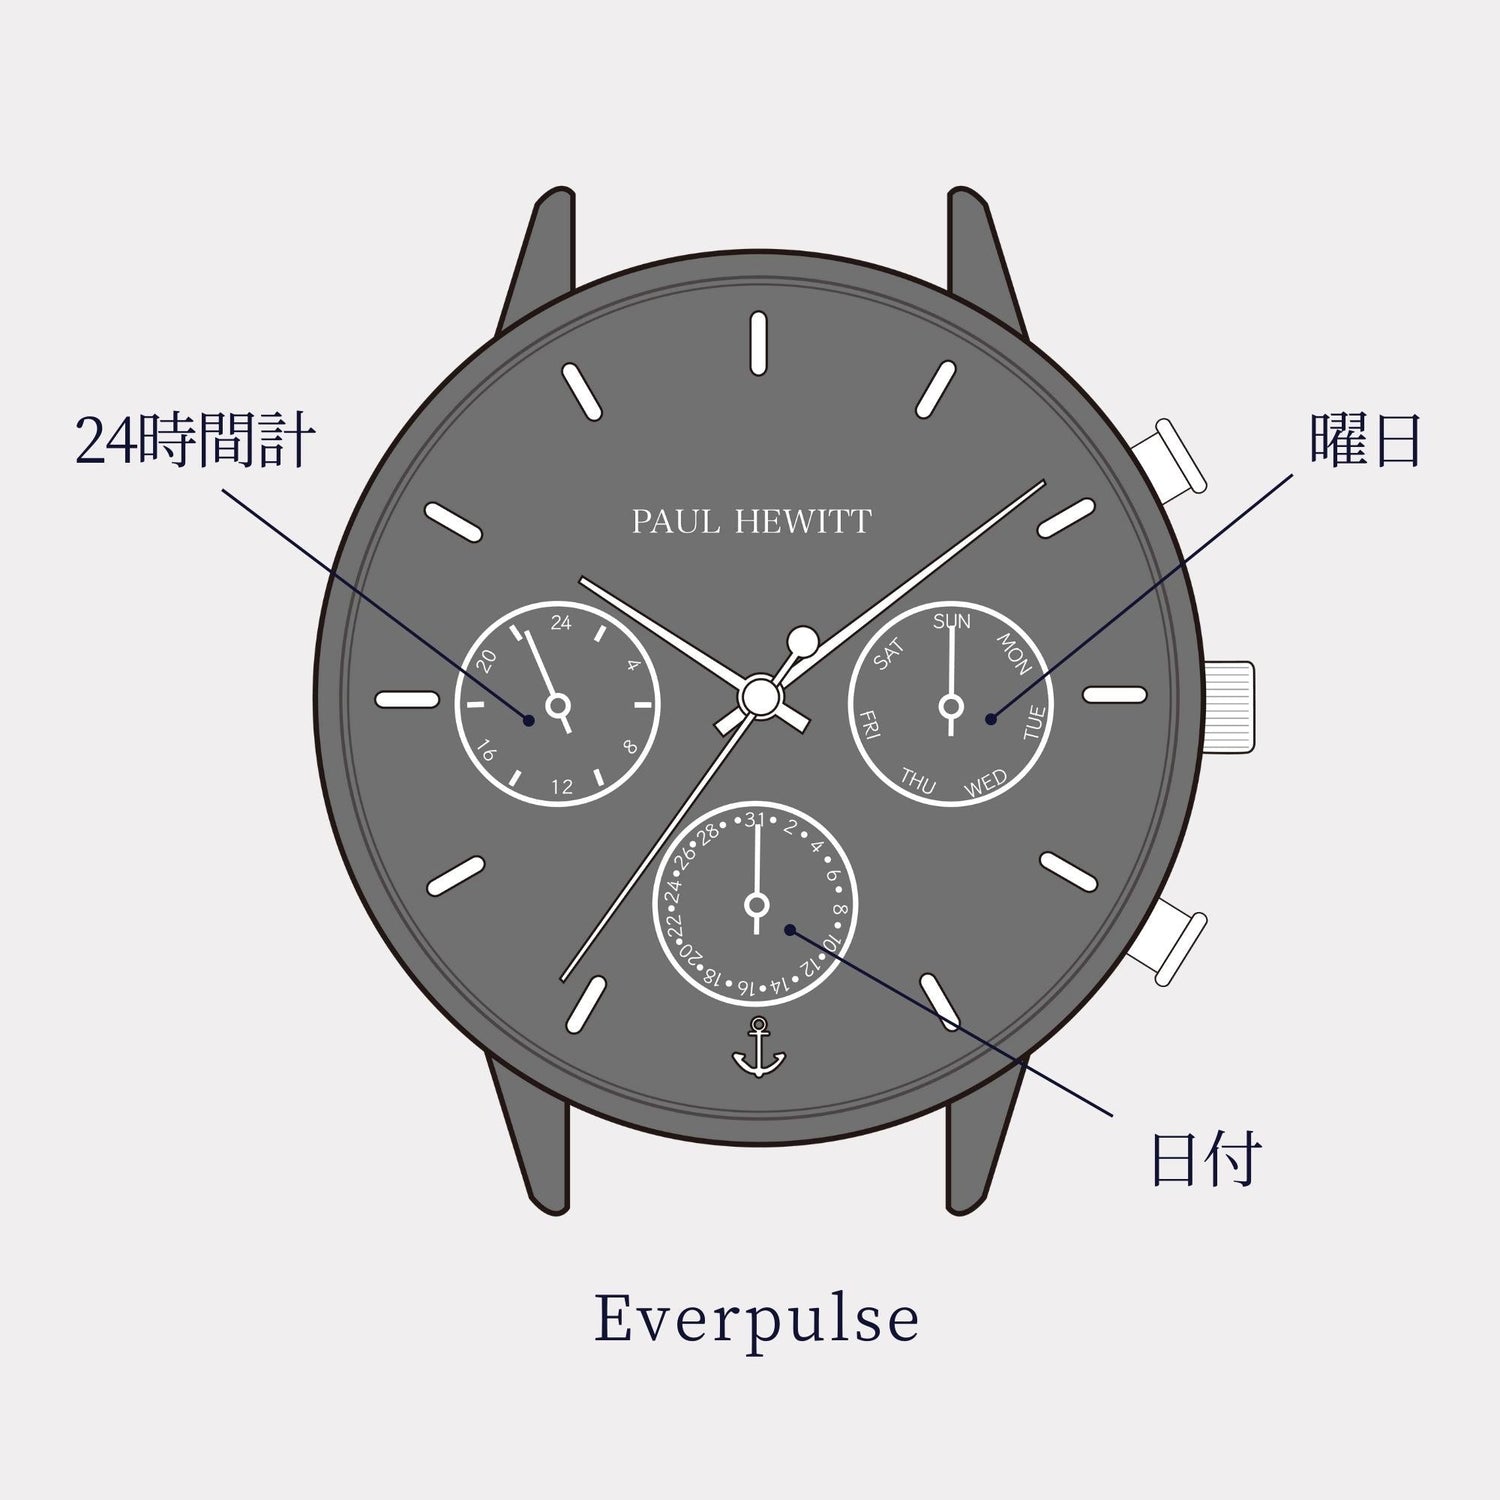 Everpulse ホワイト/メッシュ - ポールヒューイット日本公式サイト